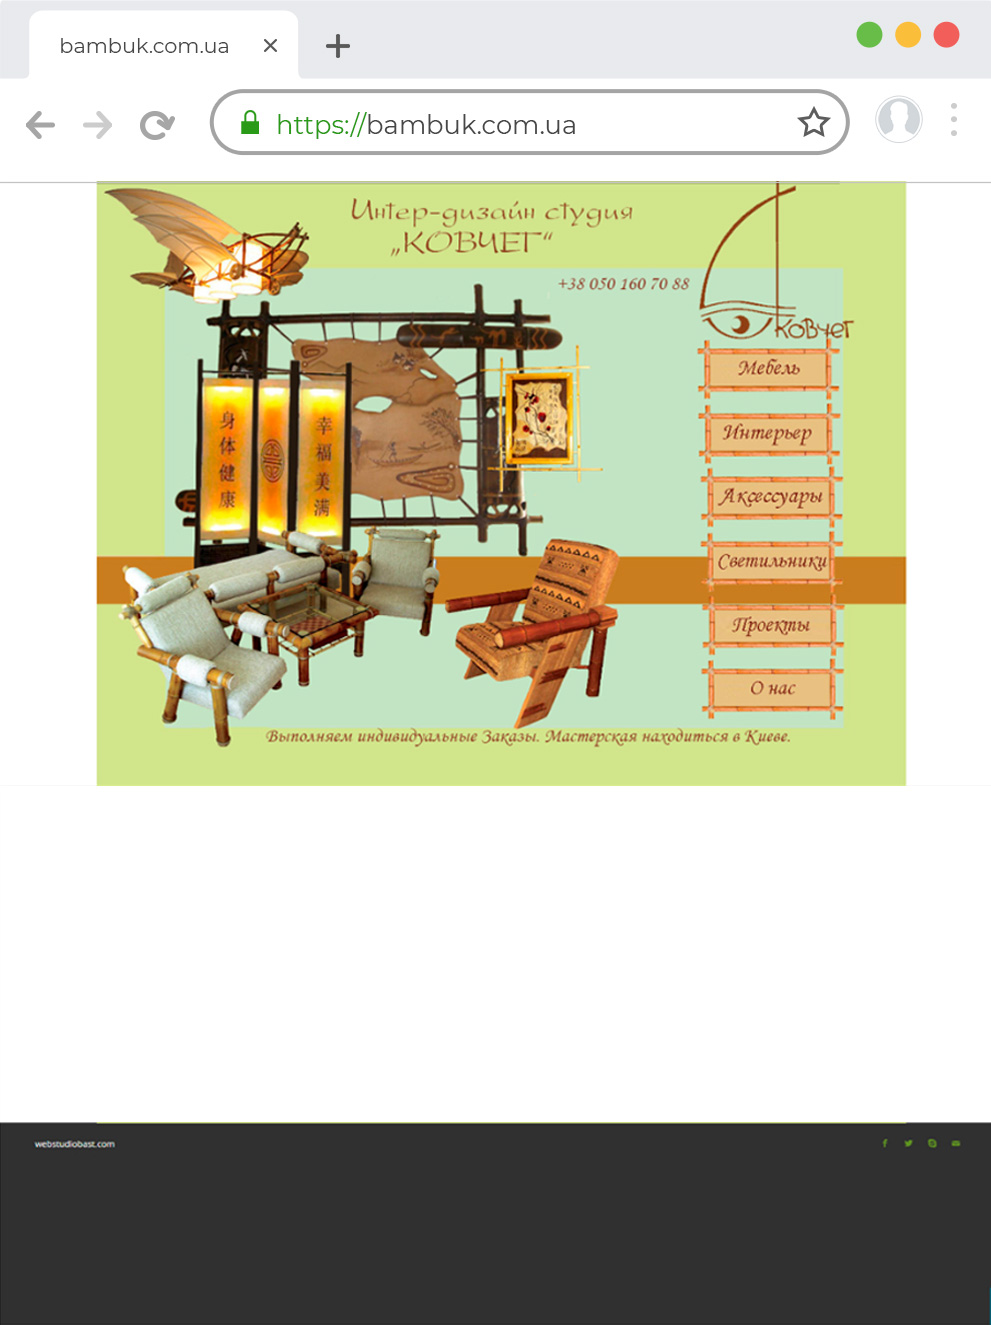 Разработка сайт на Wordpress для студии КОВЧЕГ мебели из бамбука bamboo-ark.kiev.ua